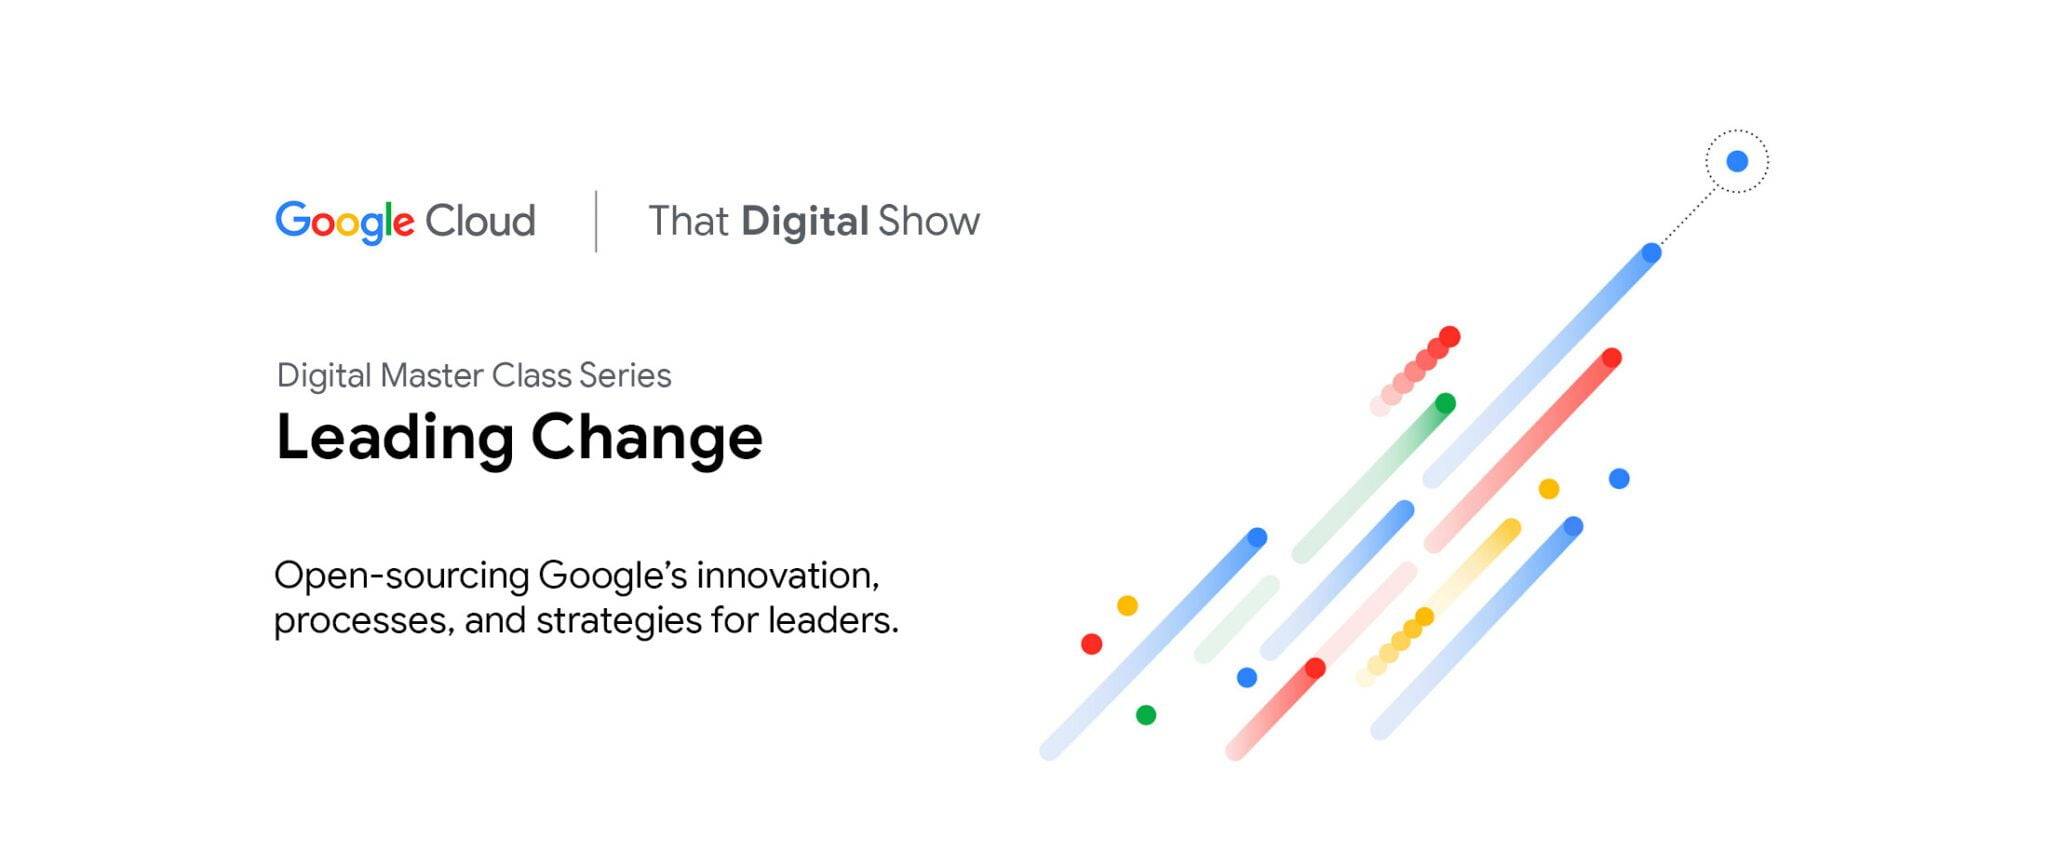 Digital Master Class series presented by Google Cloud